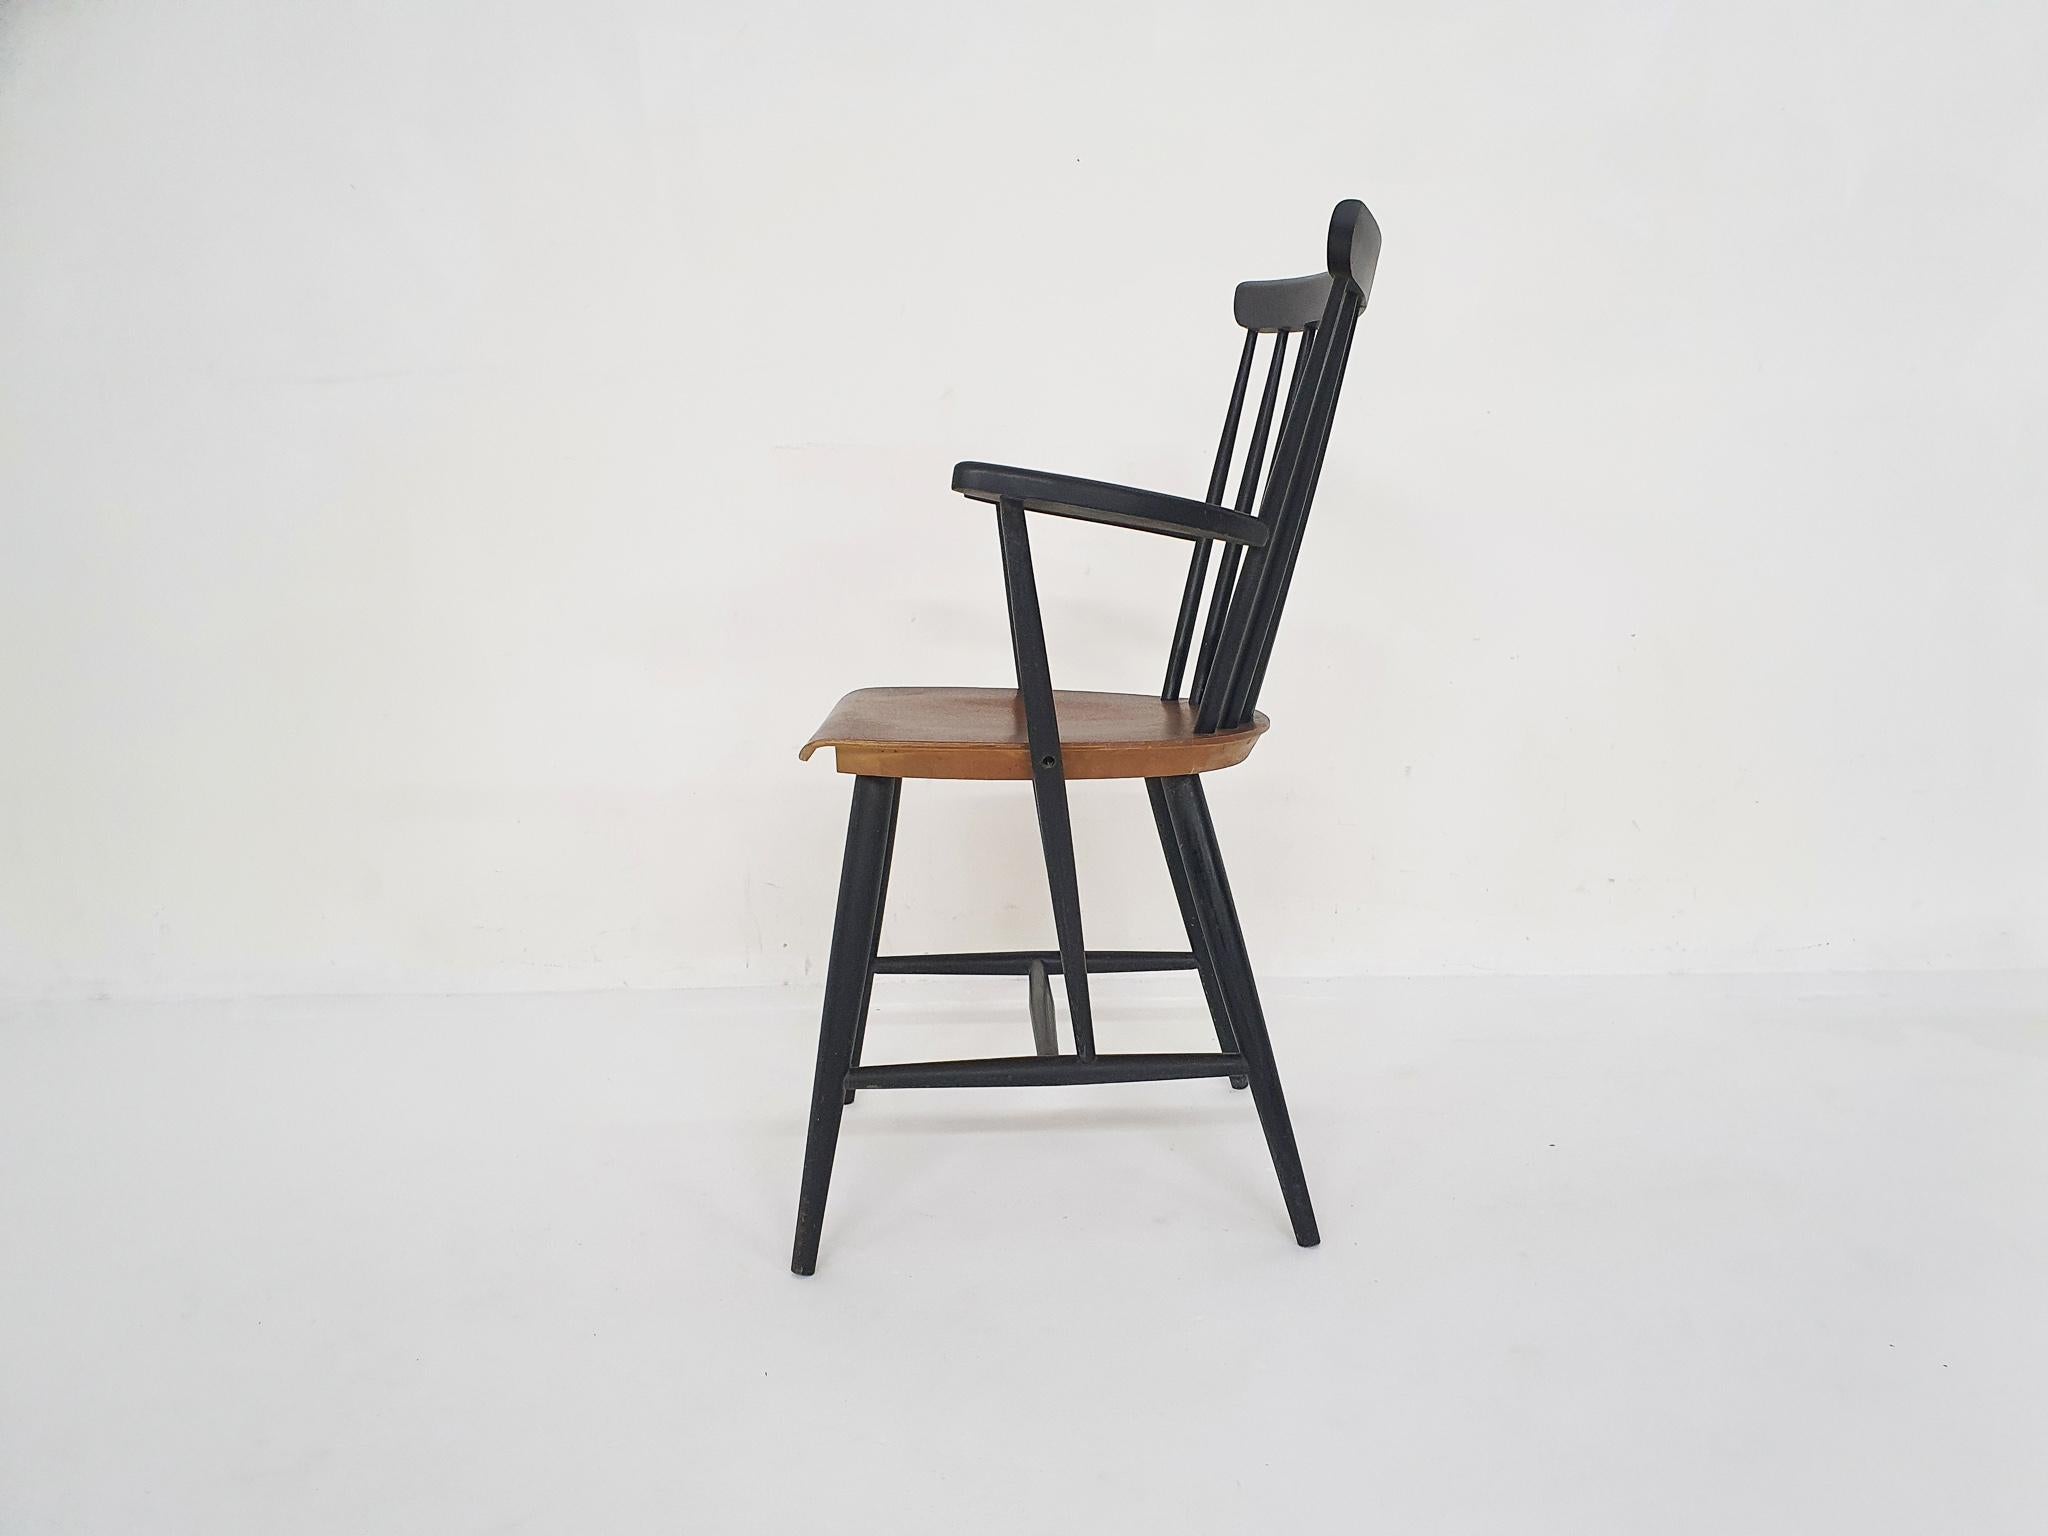 Teak arm chair with black spindles, attributed to Ilmari Tapiovaara.
Measure: The height of the arm rest is 65 cm
Ilmari Tapiovaara was born in Hämeenlinna, Finland in 1914. There he studied interior Industrial Design at the Institute of